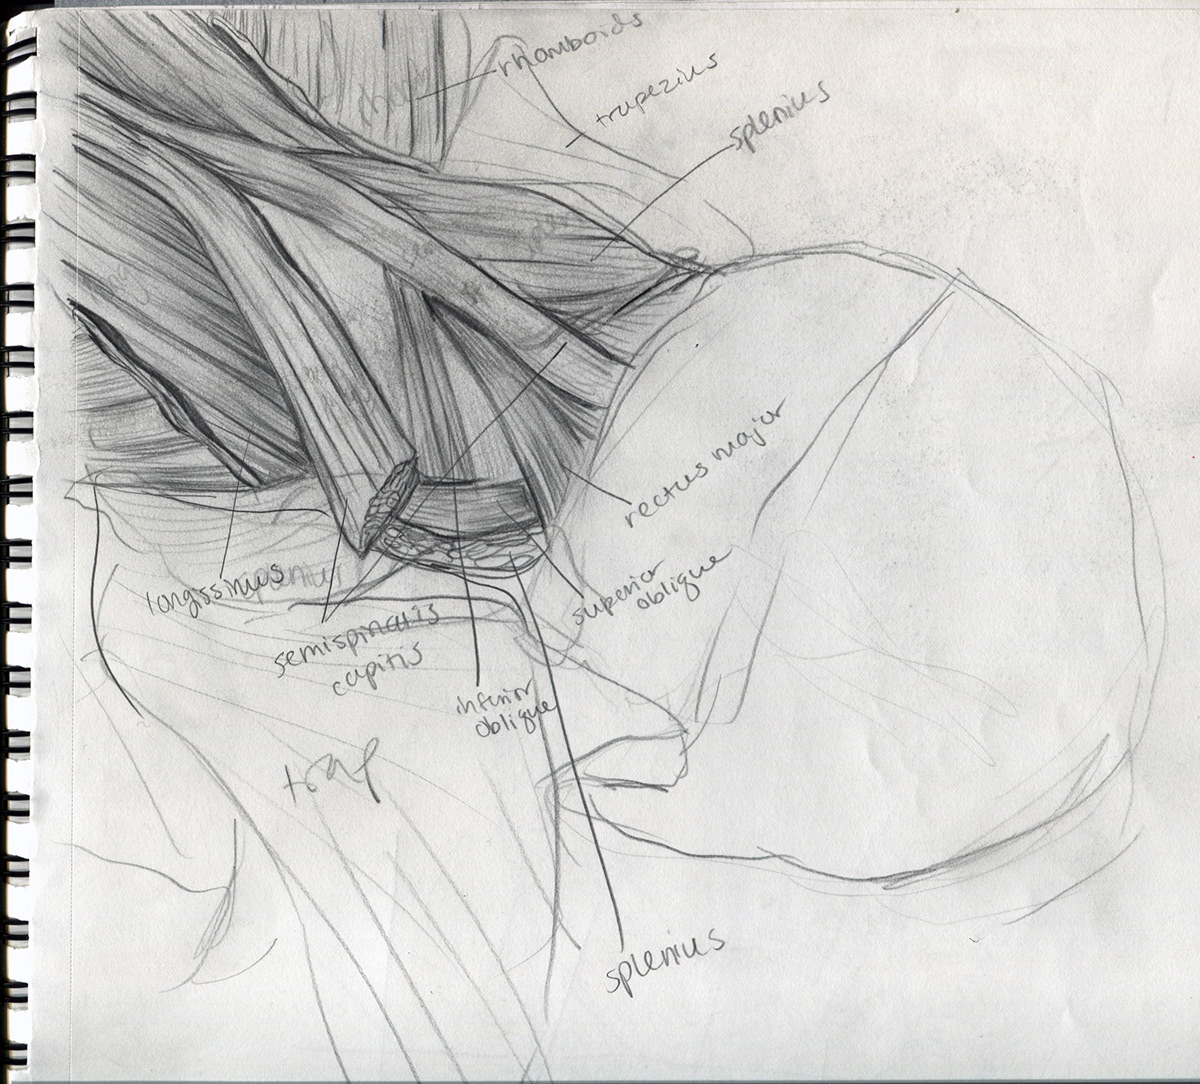 cadaver sketches medical illustration pencil